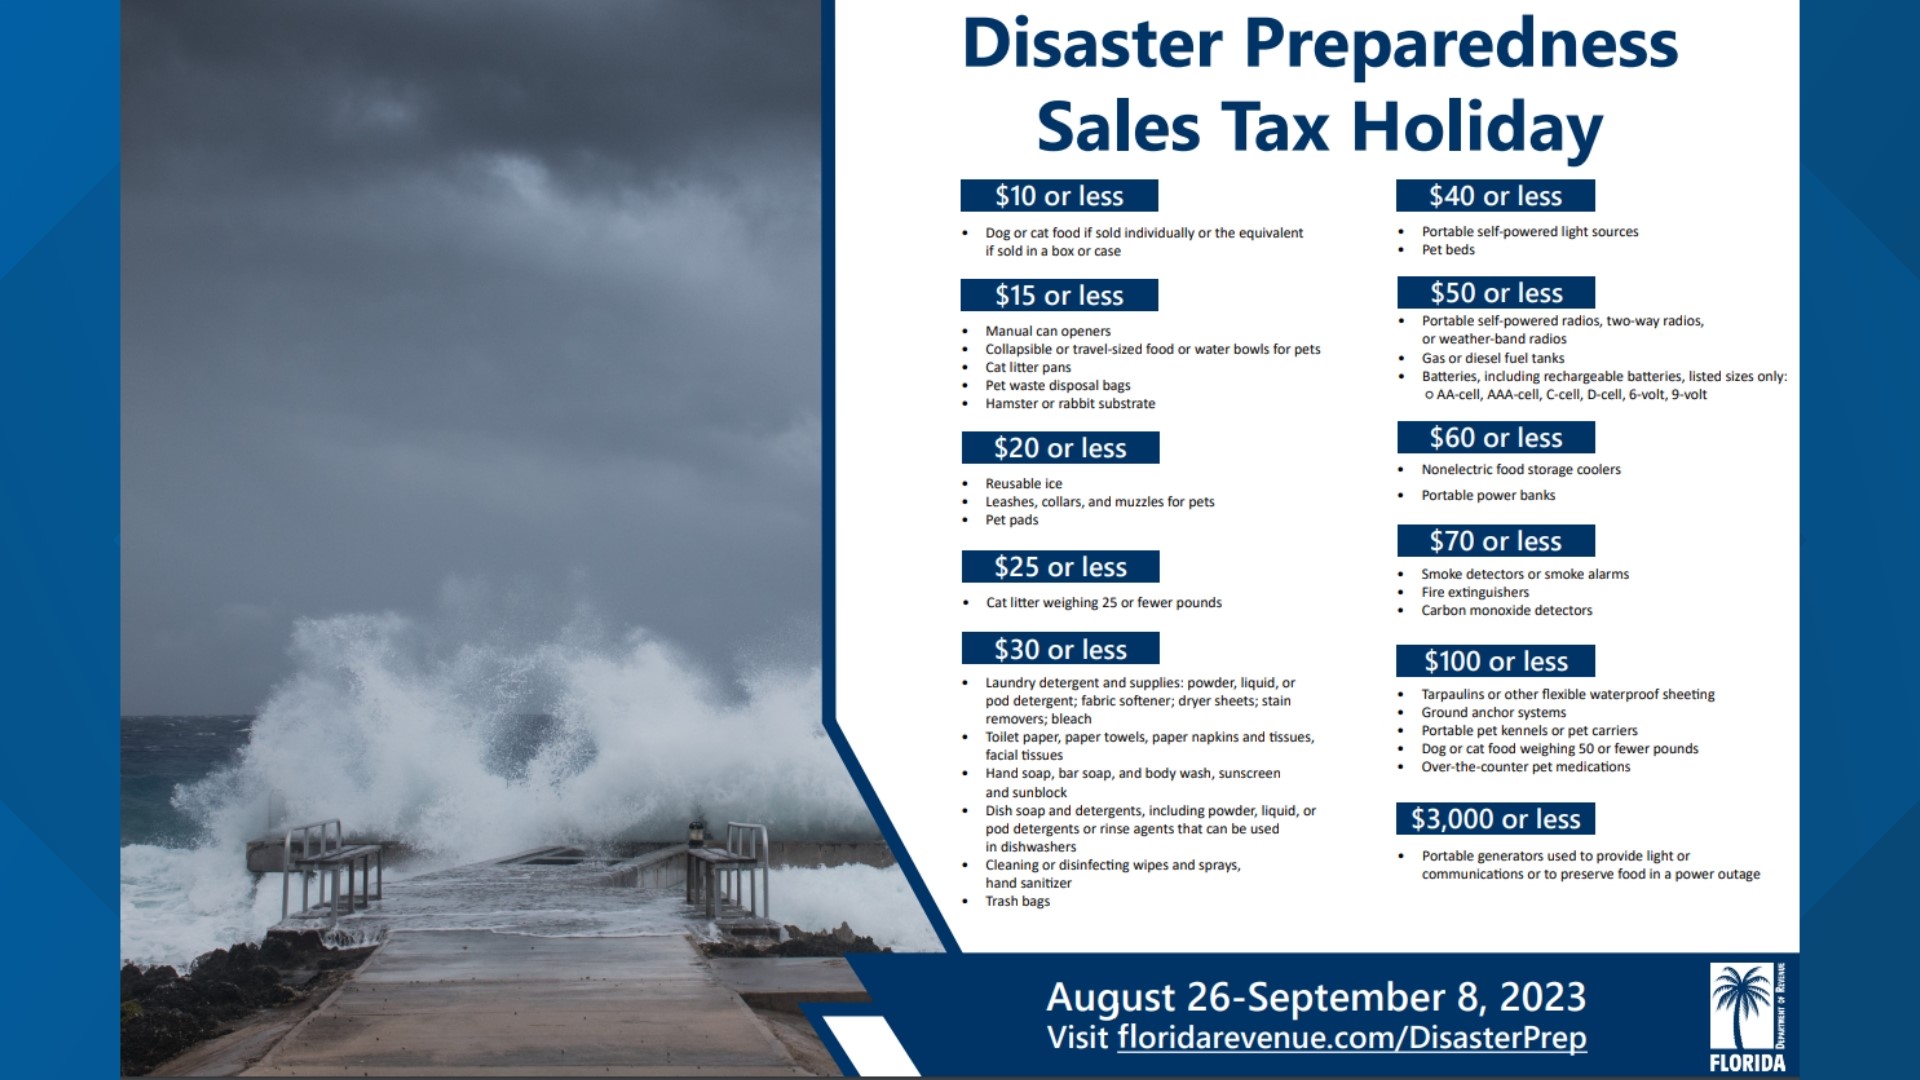 Florida Disaster Preparedness Sales Tax Holiday starts August 26